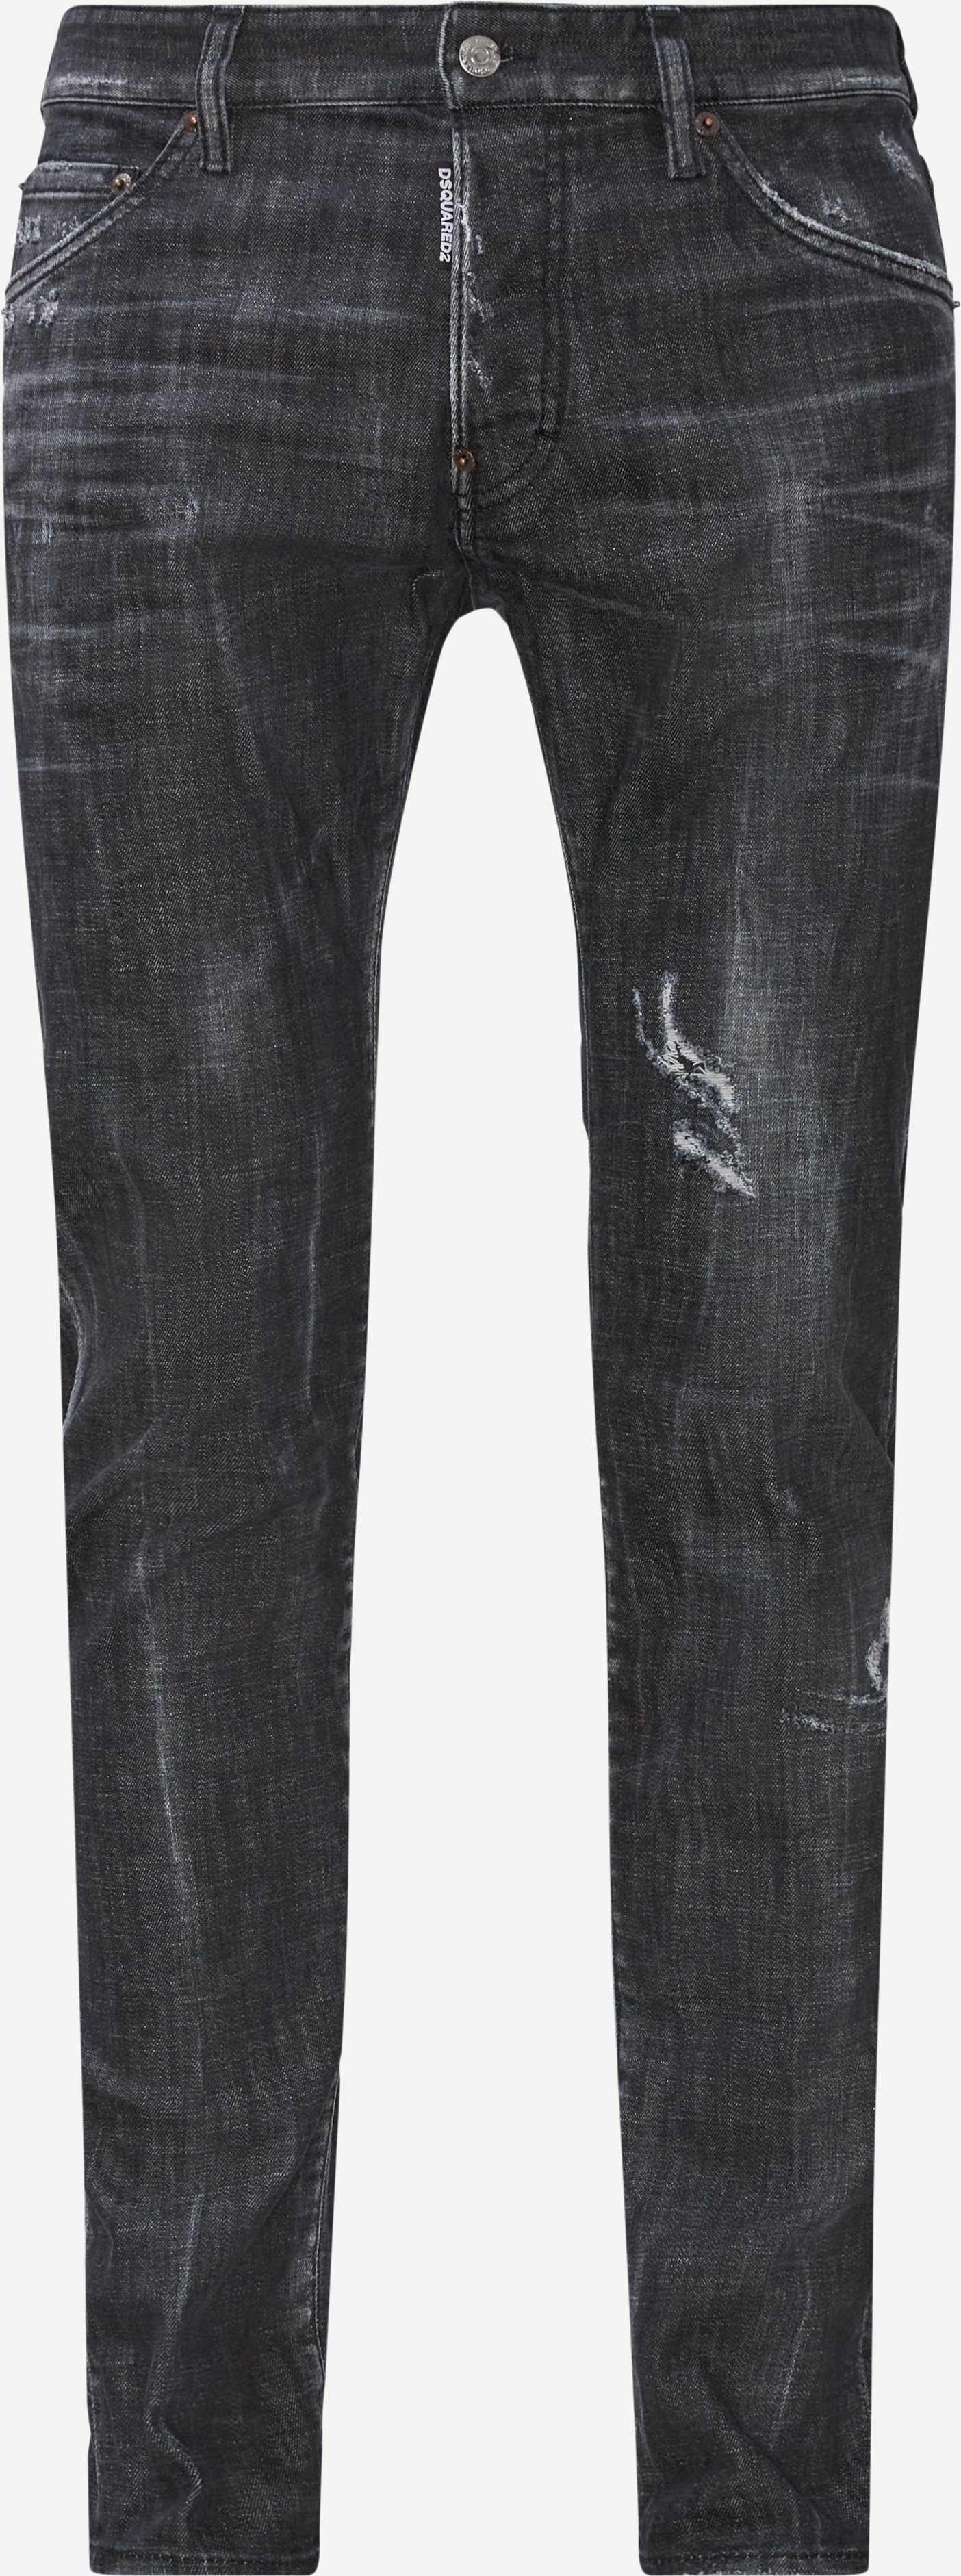 Cool Guy Jeans - Jeans - Slim fit - Sort